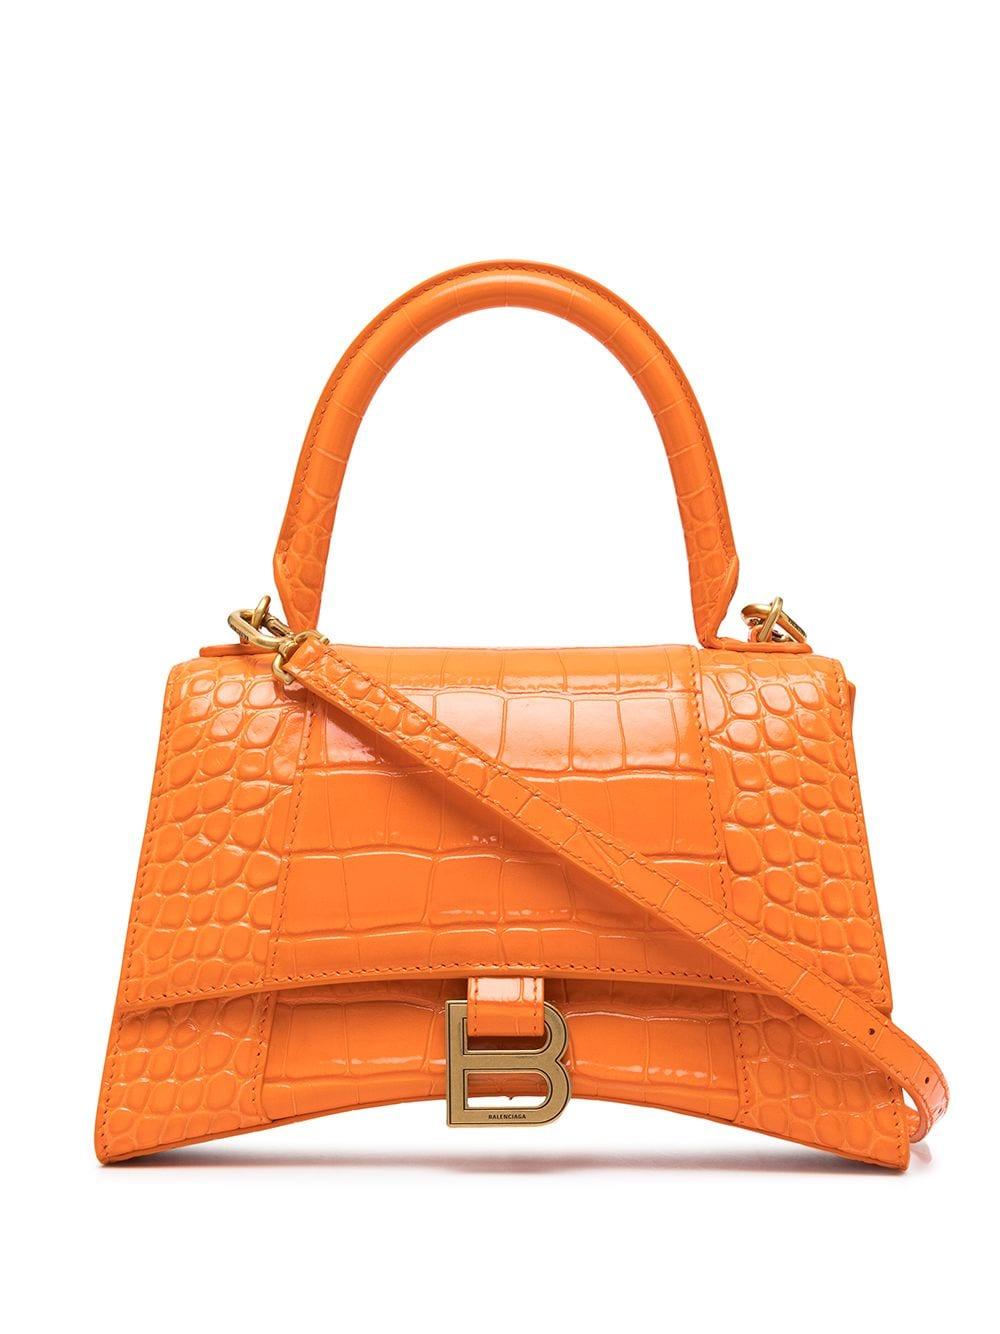 Balenciaga  Small Orange Embossed Hourglass Bag  eBay